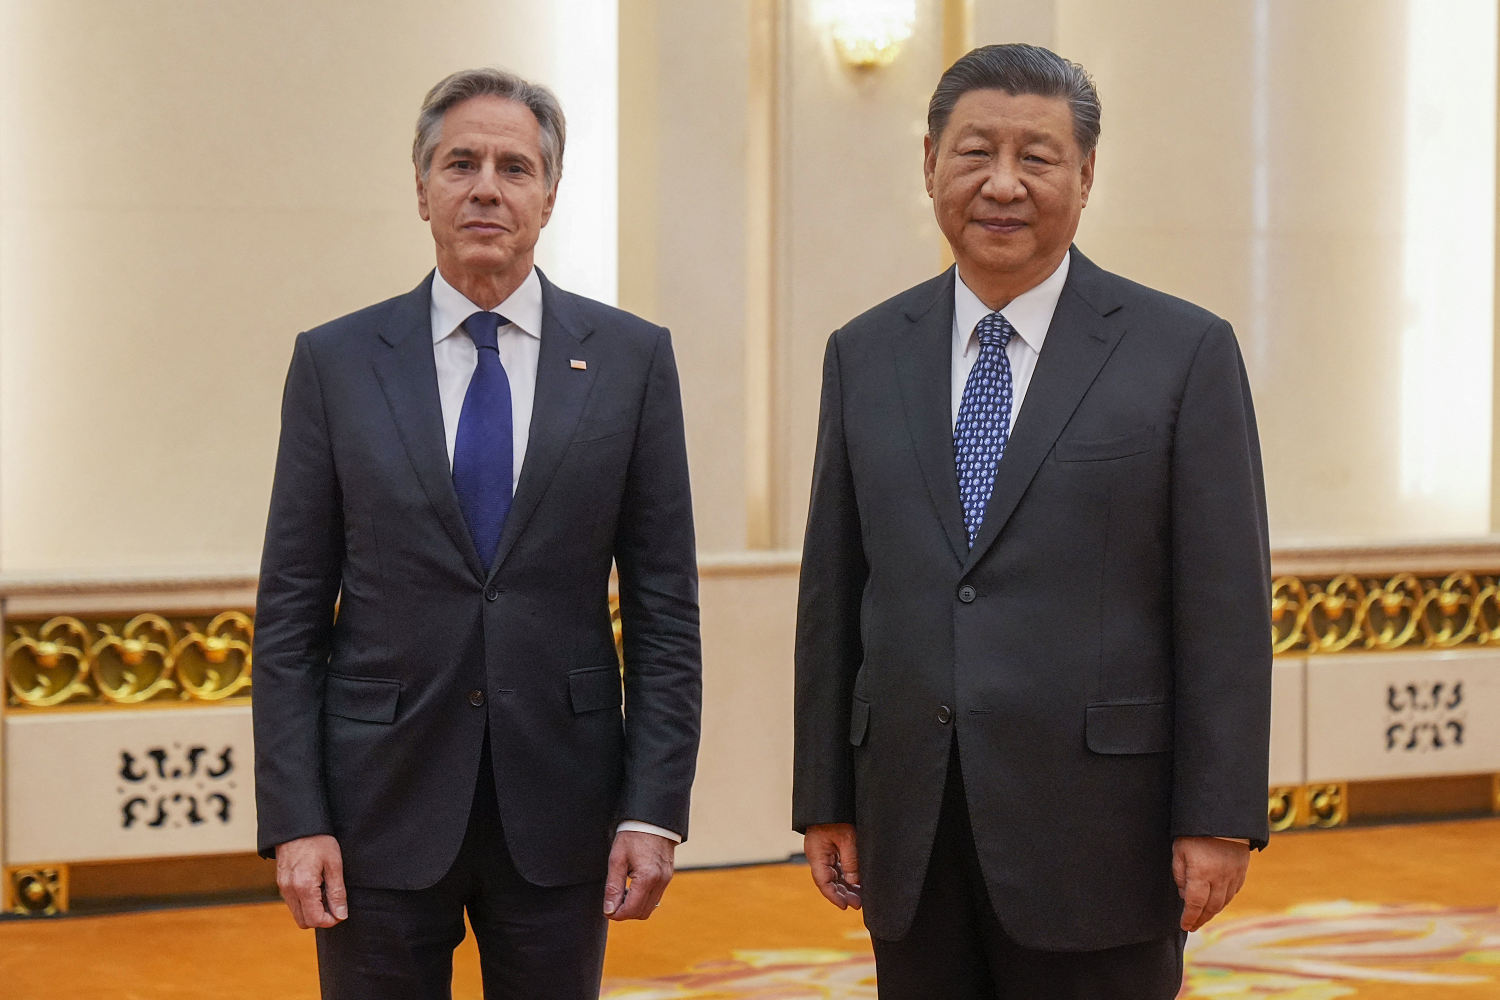 China warns U.S. of ‘downward spiral’ as Blinken meets with Xi Jinping